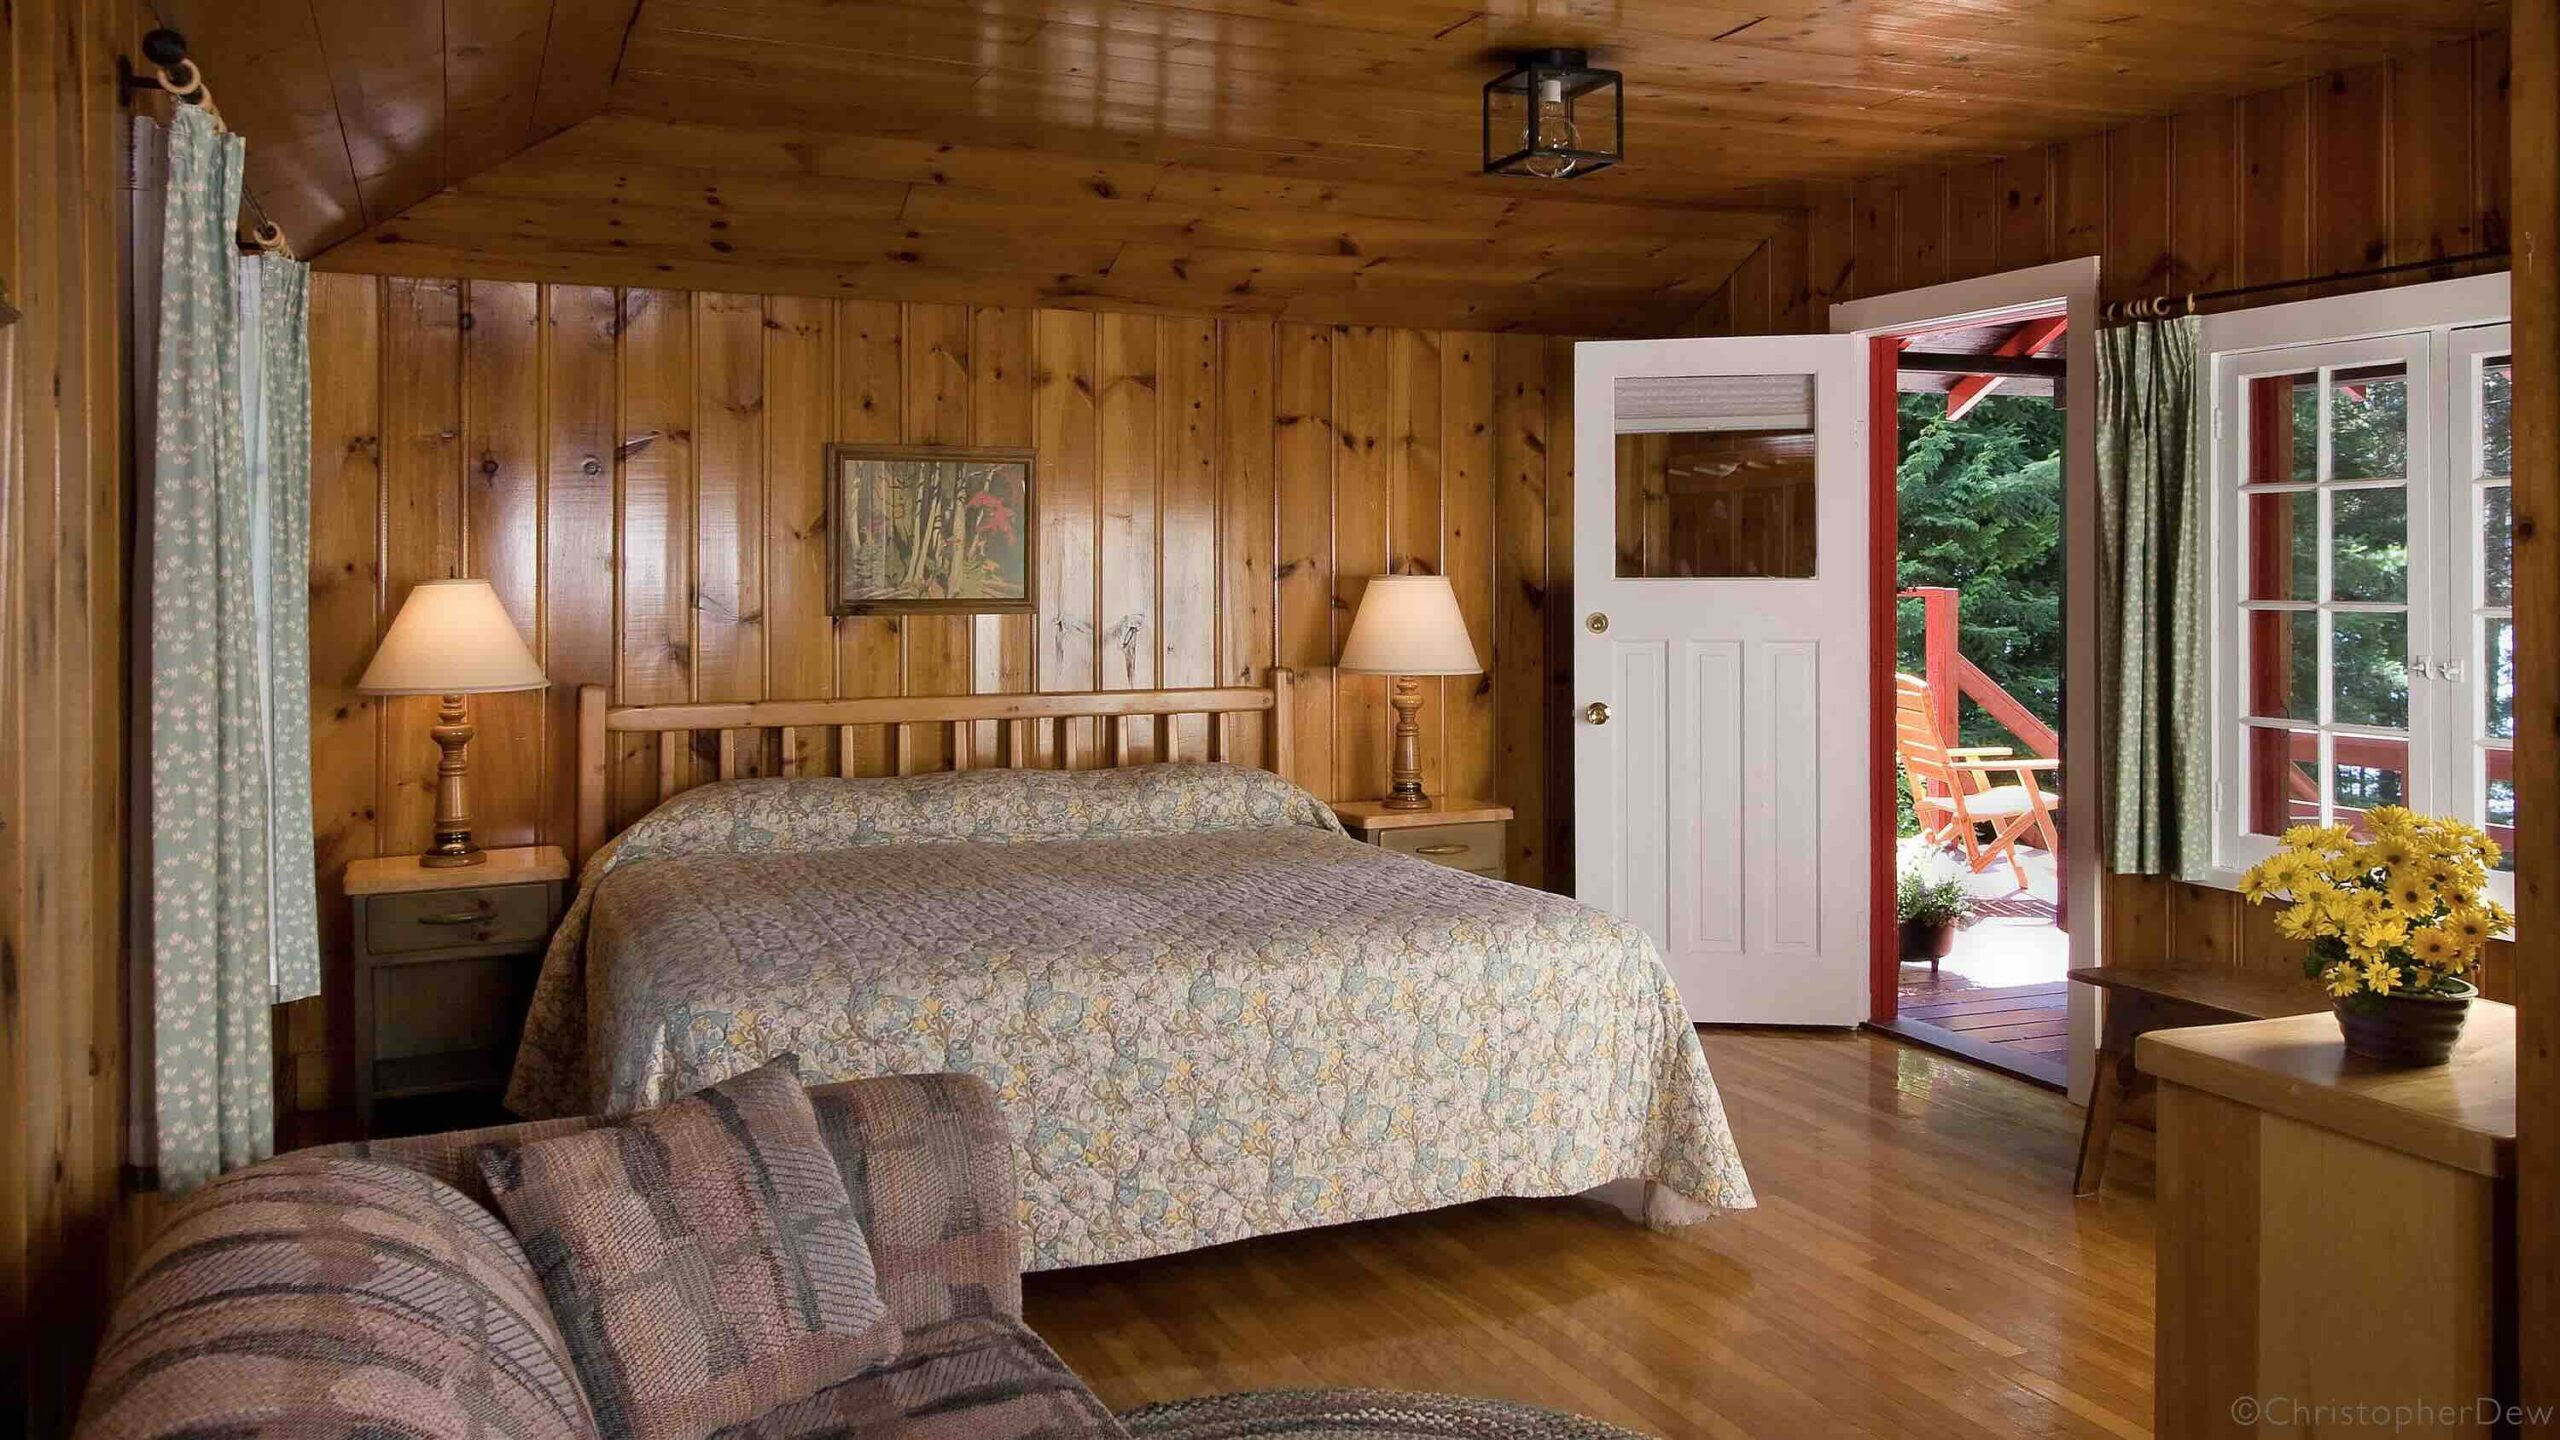 Killarney Lodge rustic cabin bedroom